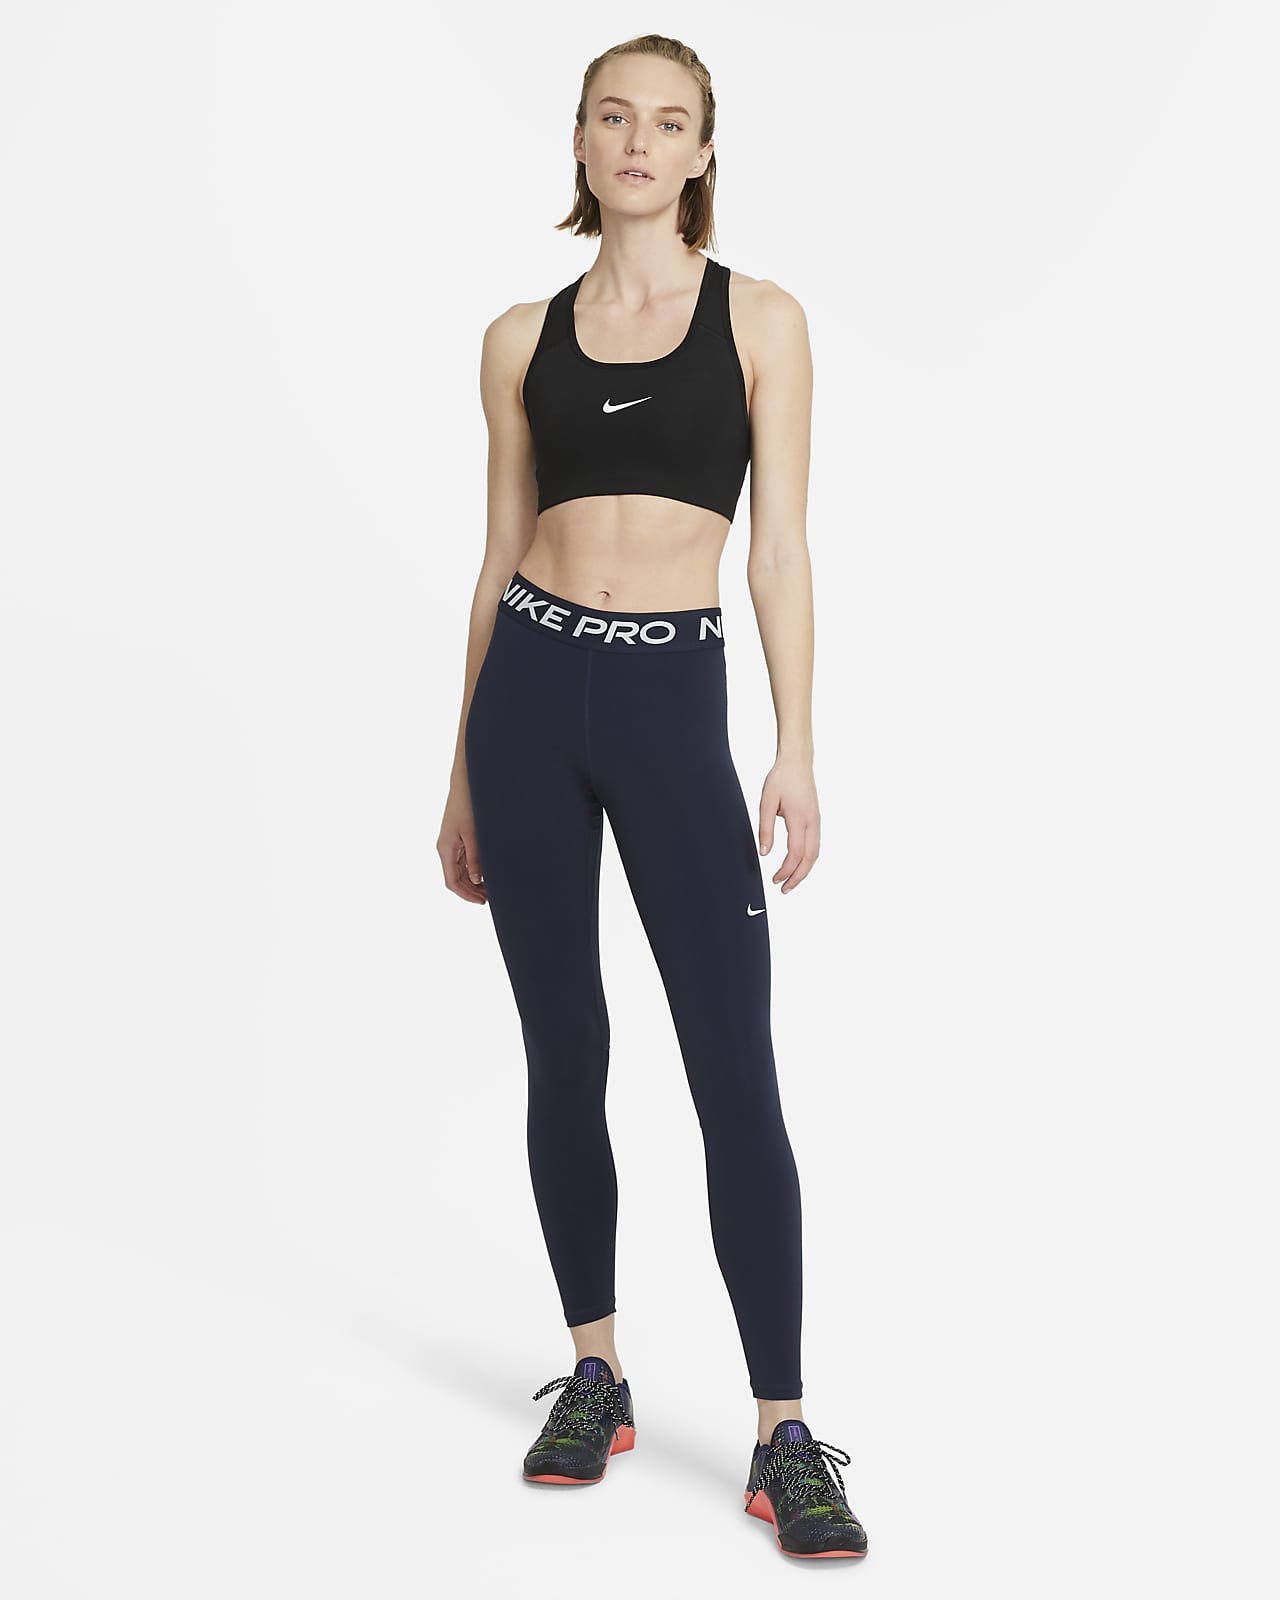 Mallas largas Nike Nike Pro para Mujeres - CZ9779